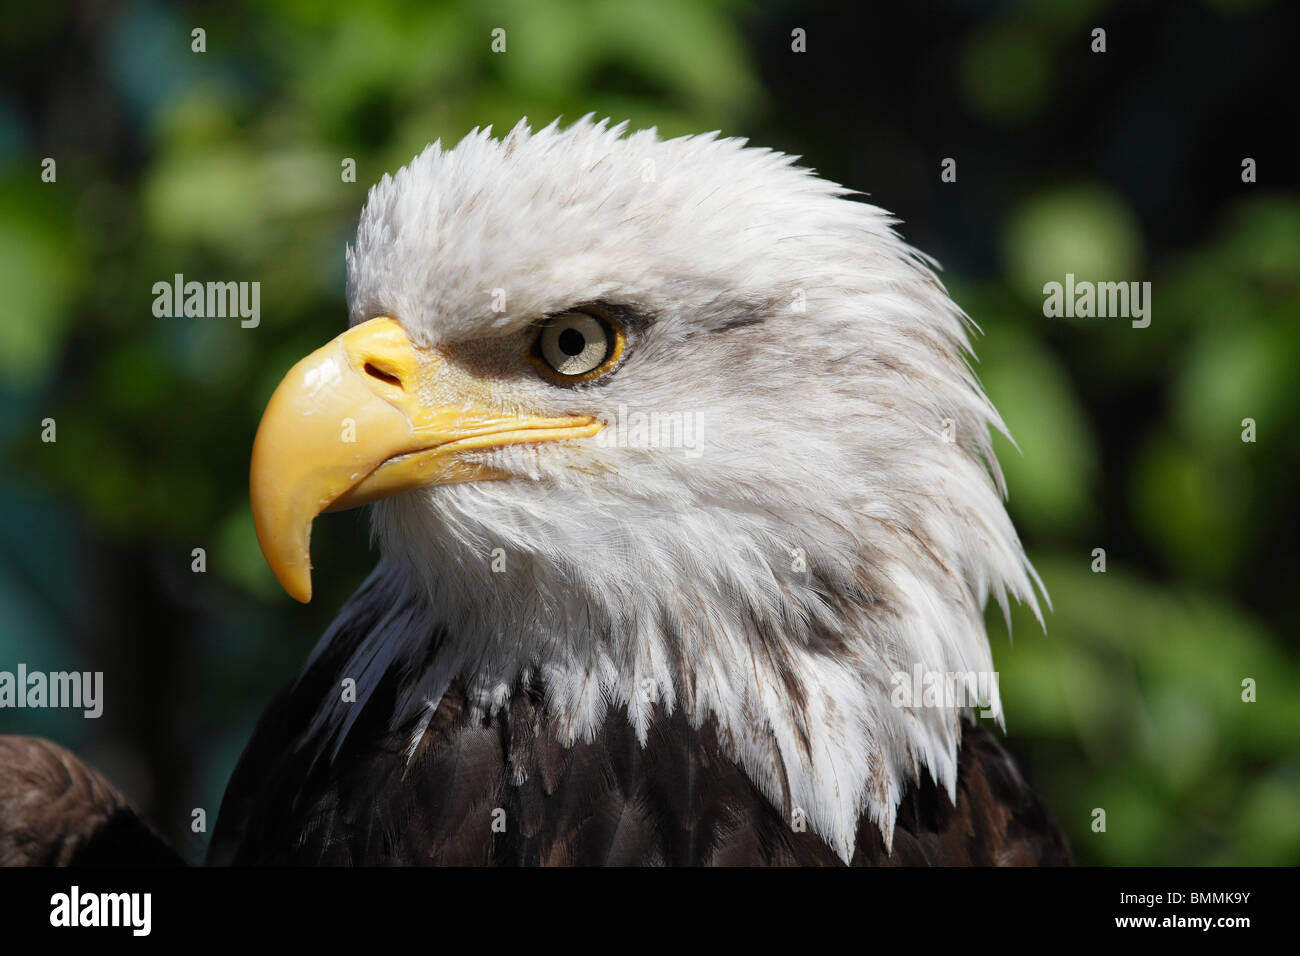 Magnificent Bald Eagle in Ketchikan, Alaska 9 Stock Photo